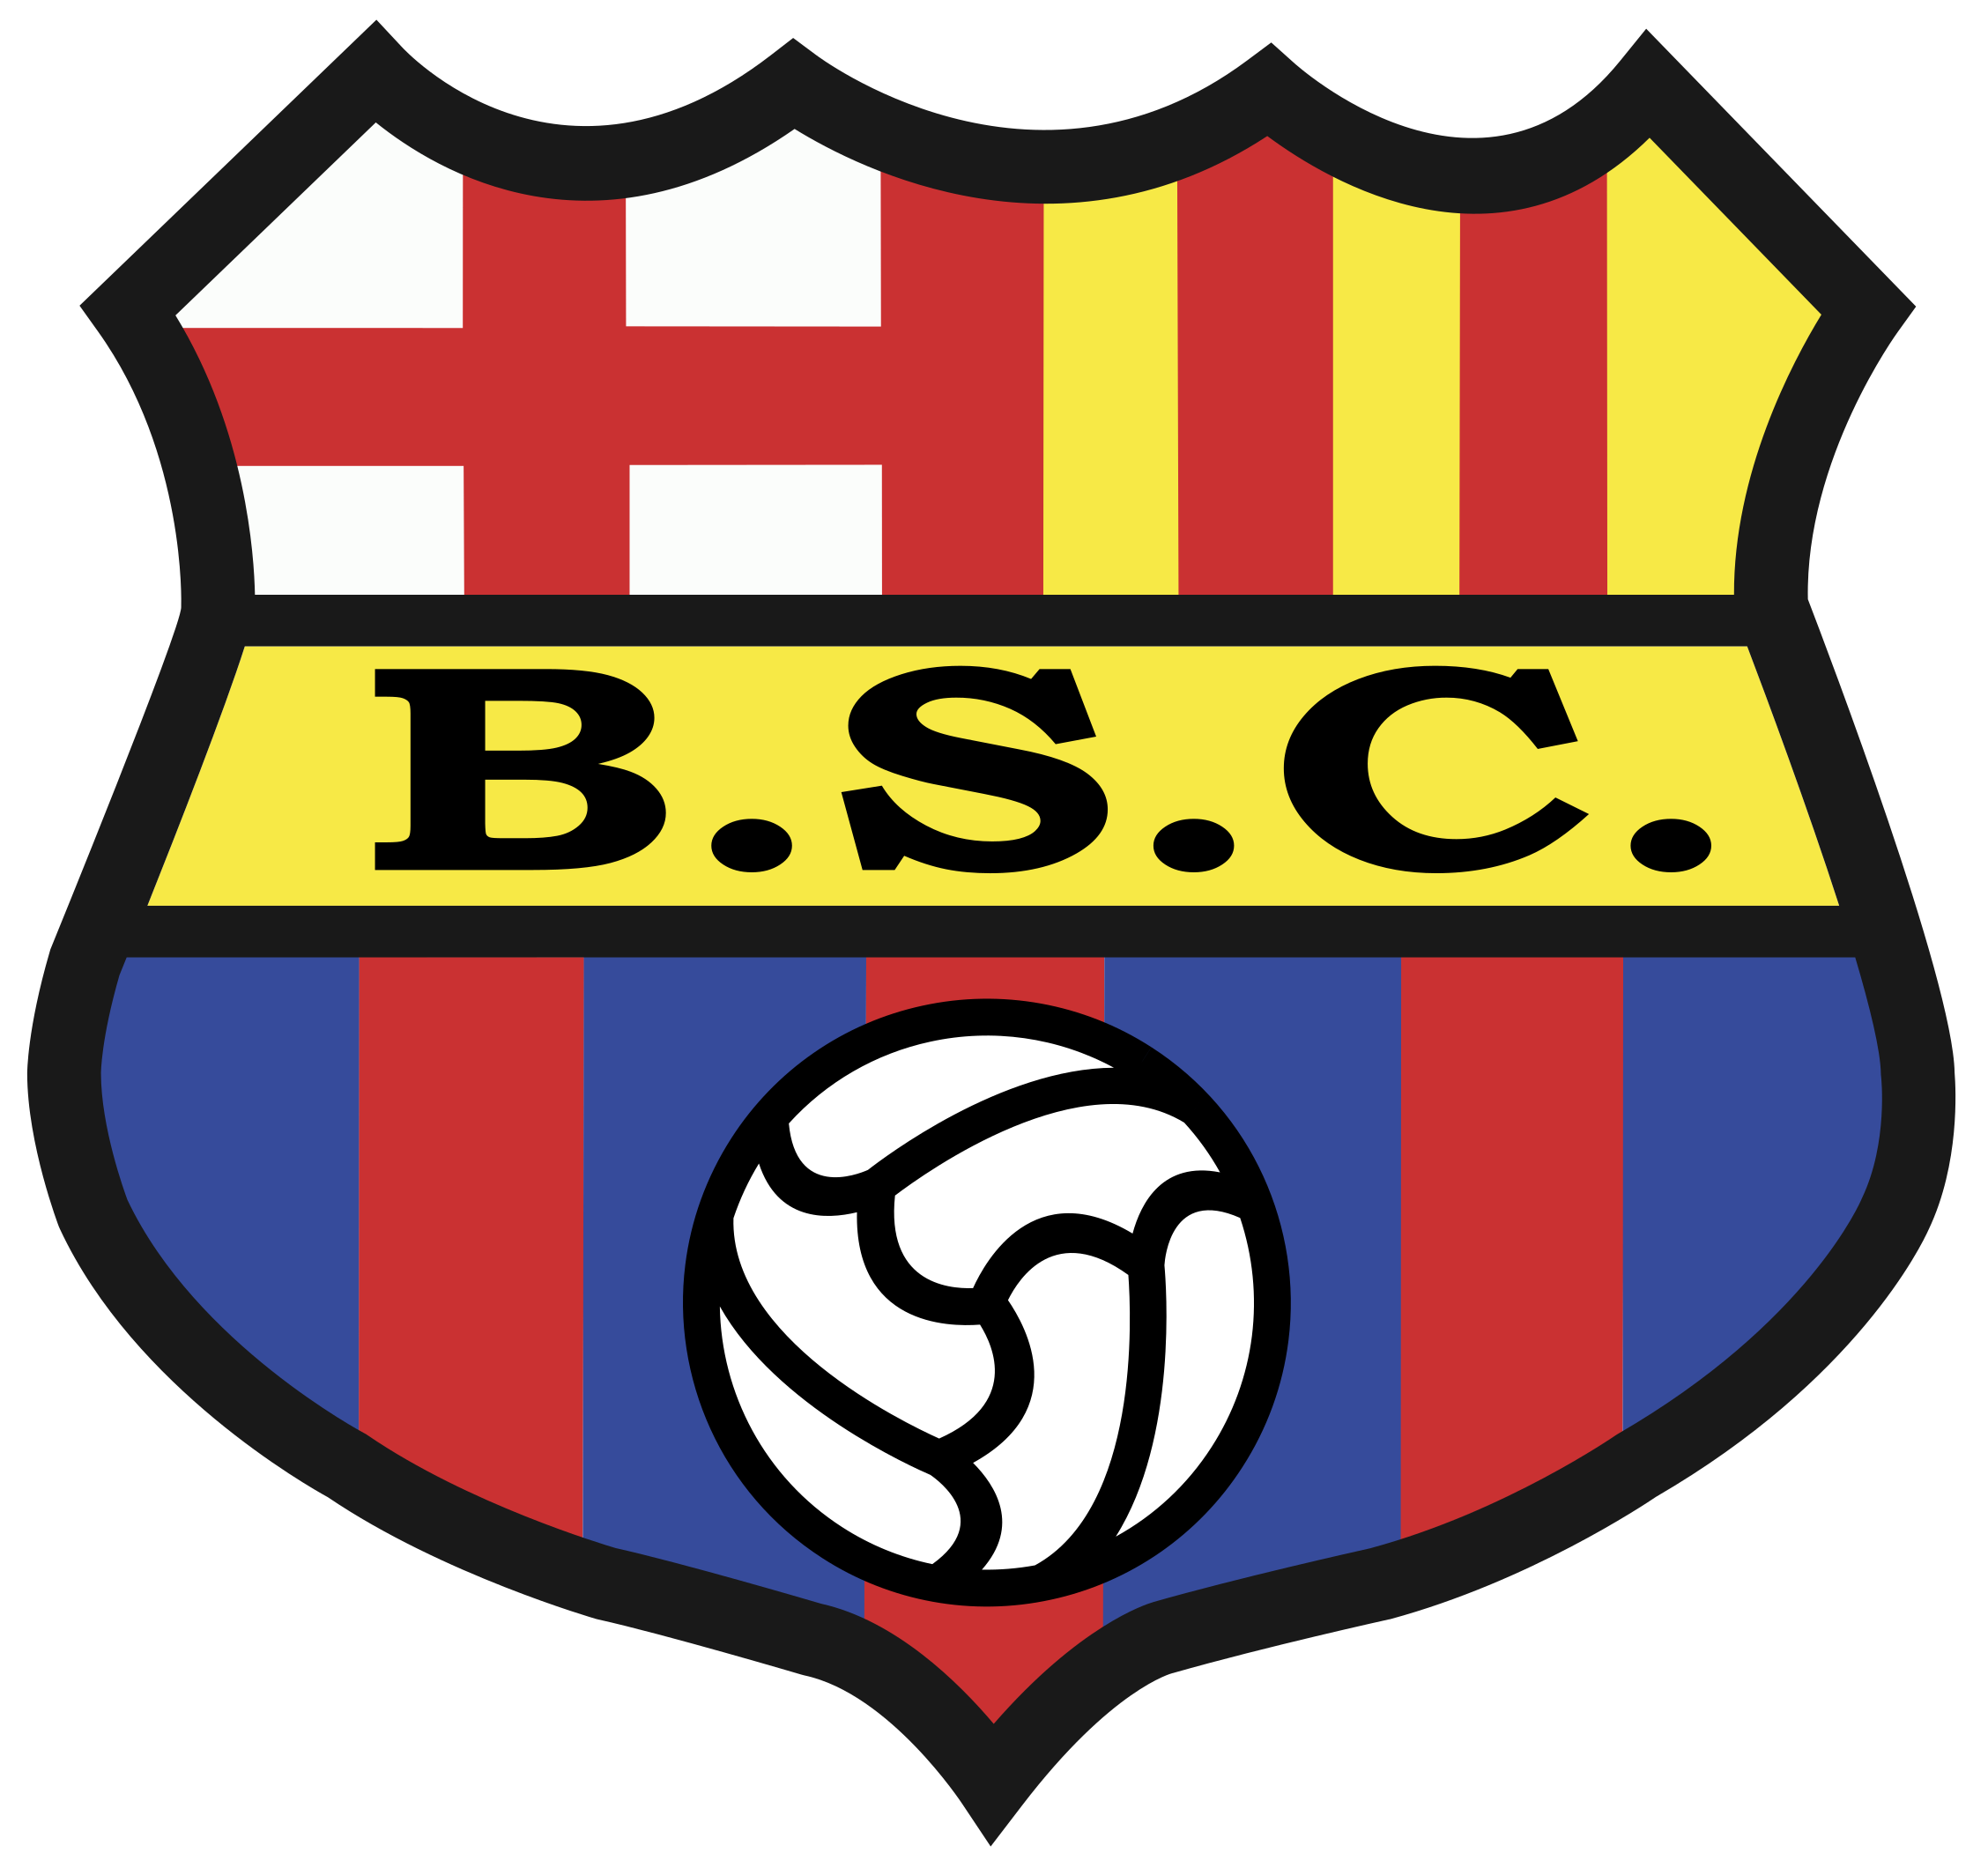 Barcelona S.C.